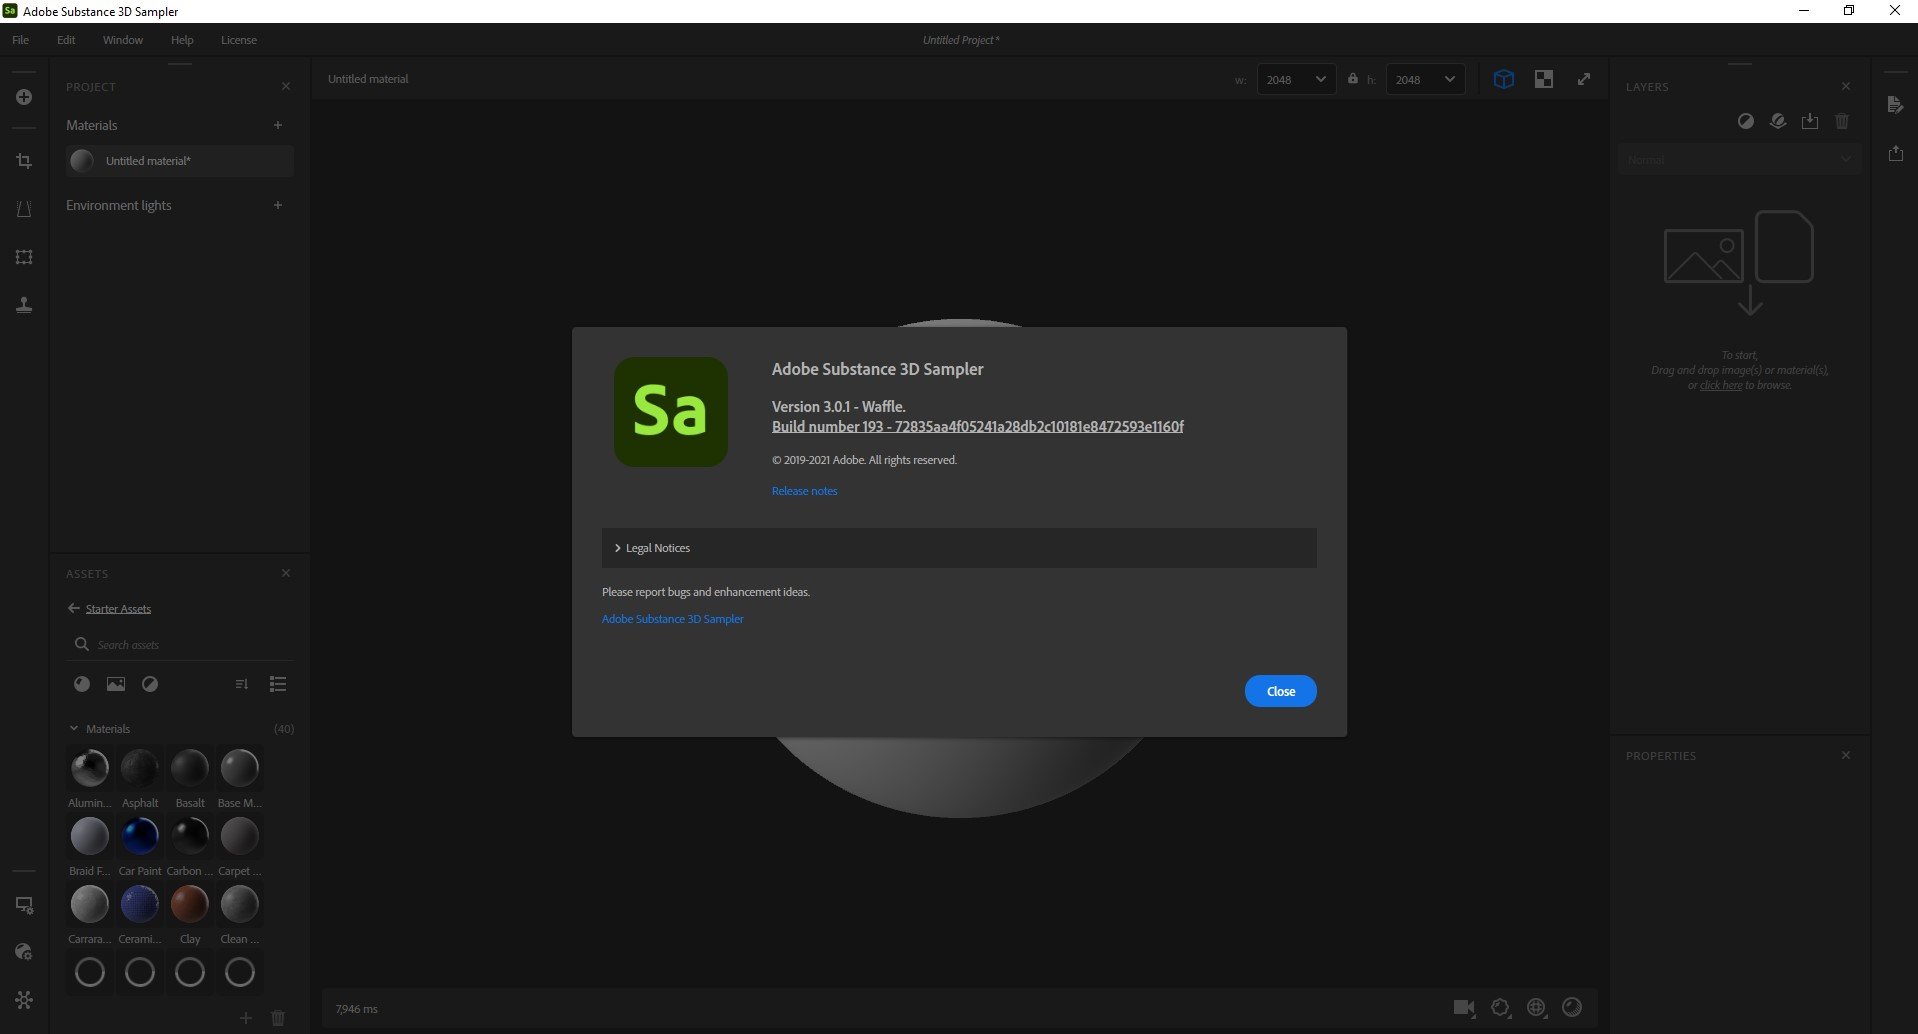 Adobe Substance 3D Sampler 4.1.2.3298 instal the new version for ios